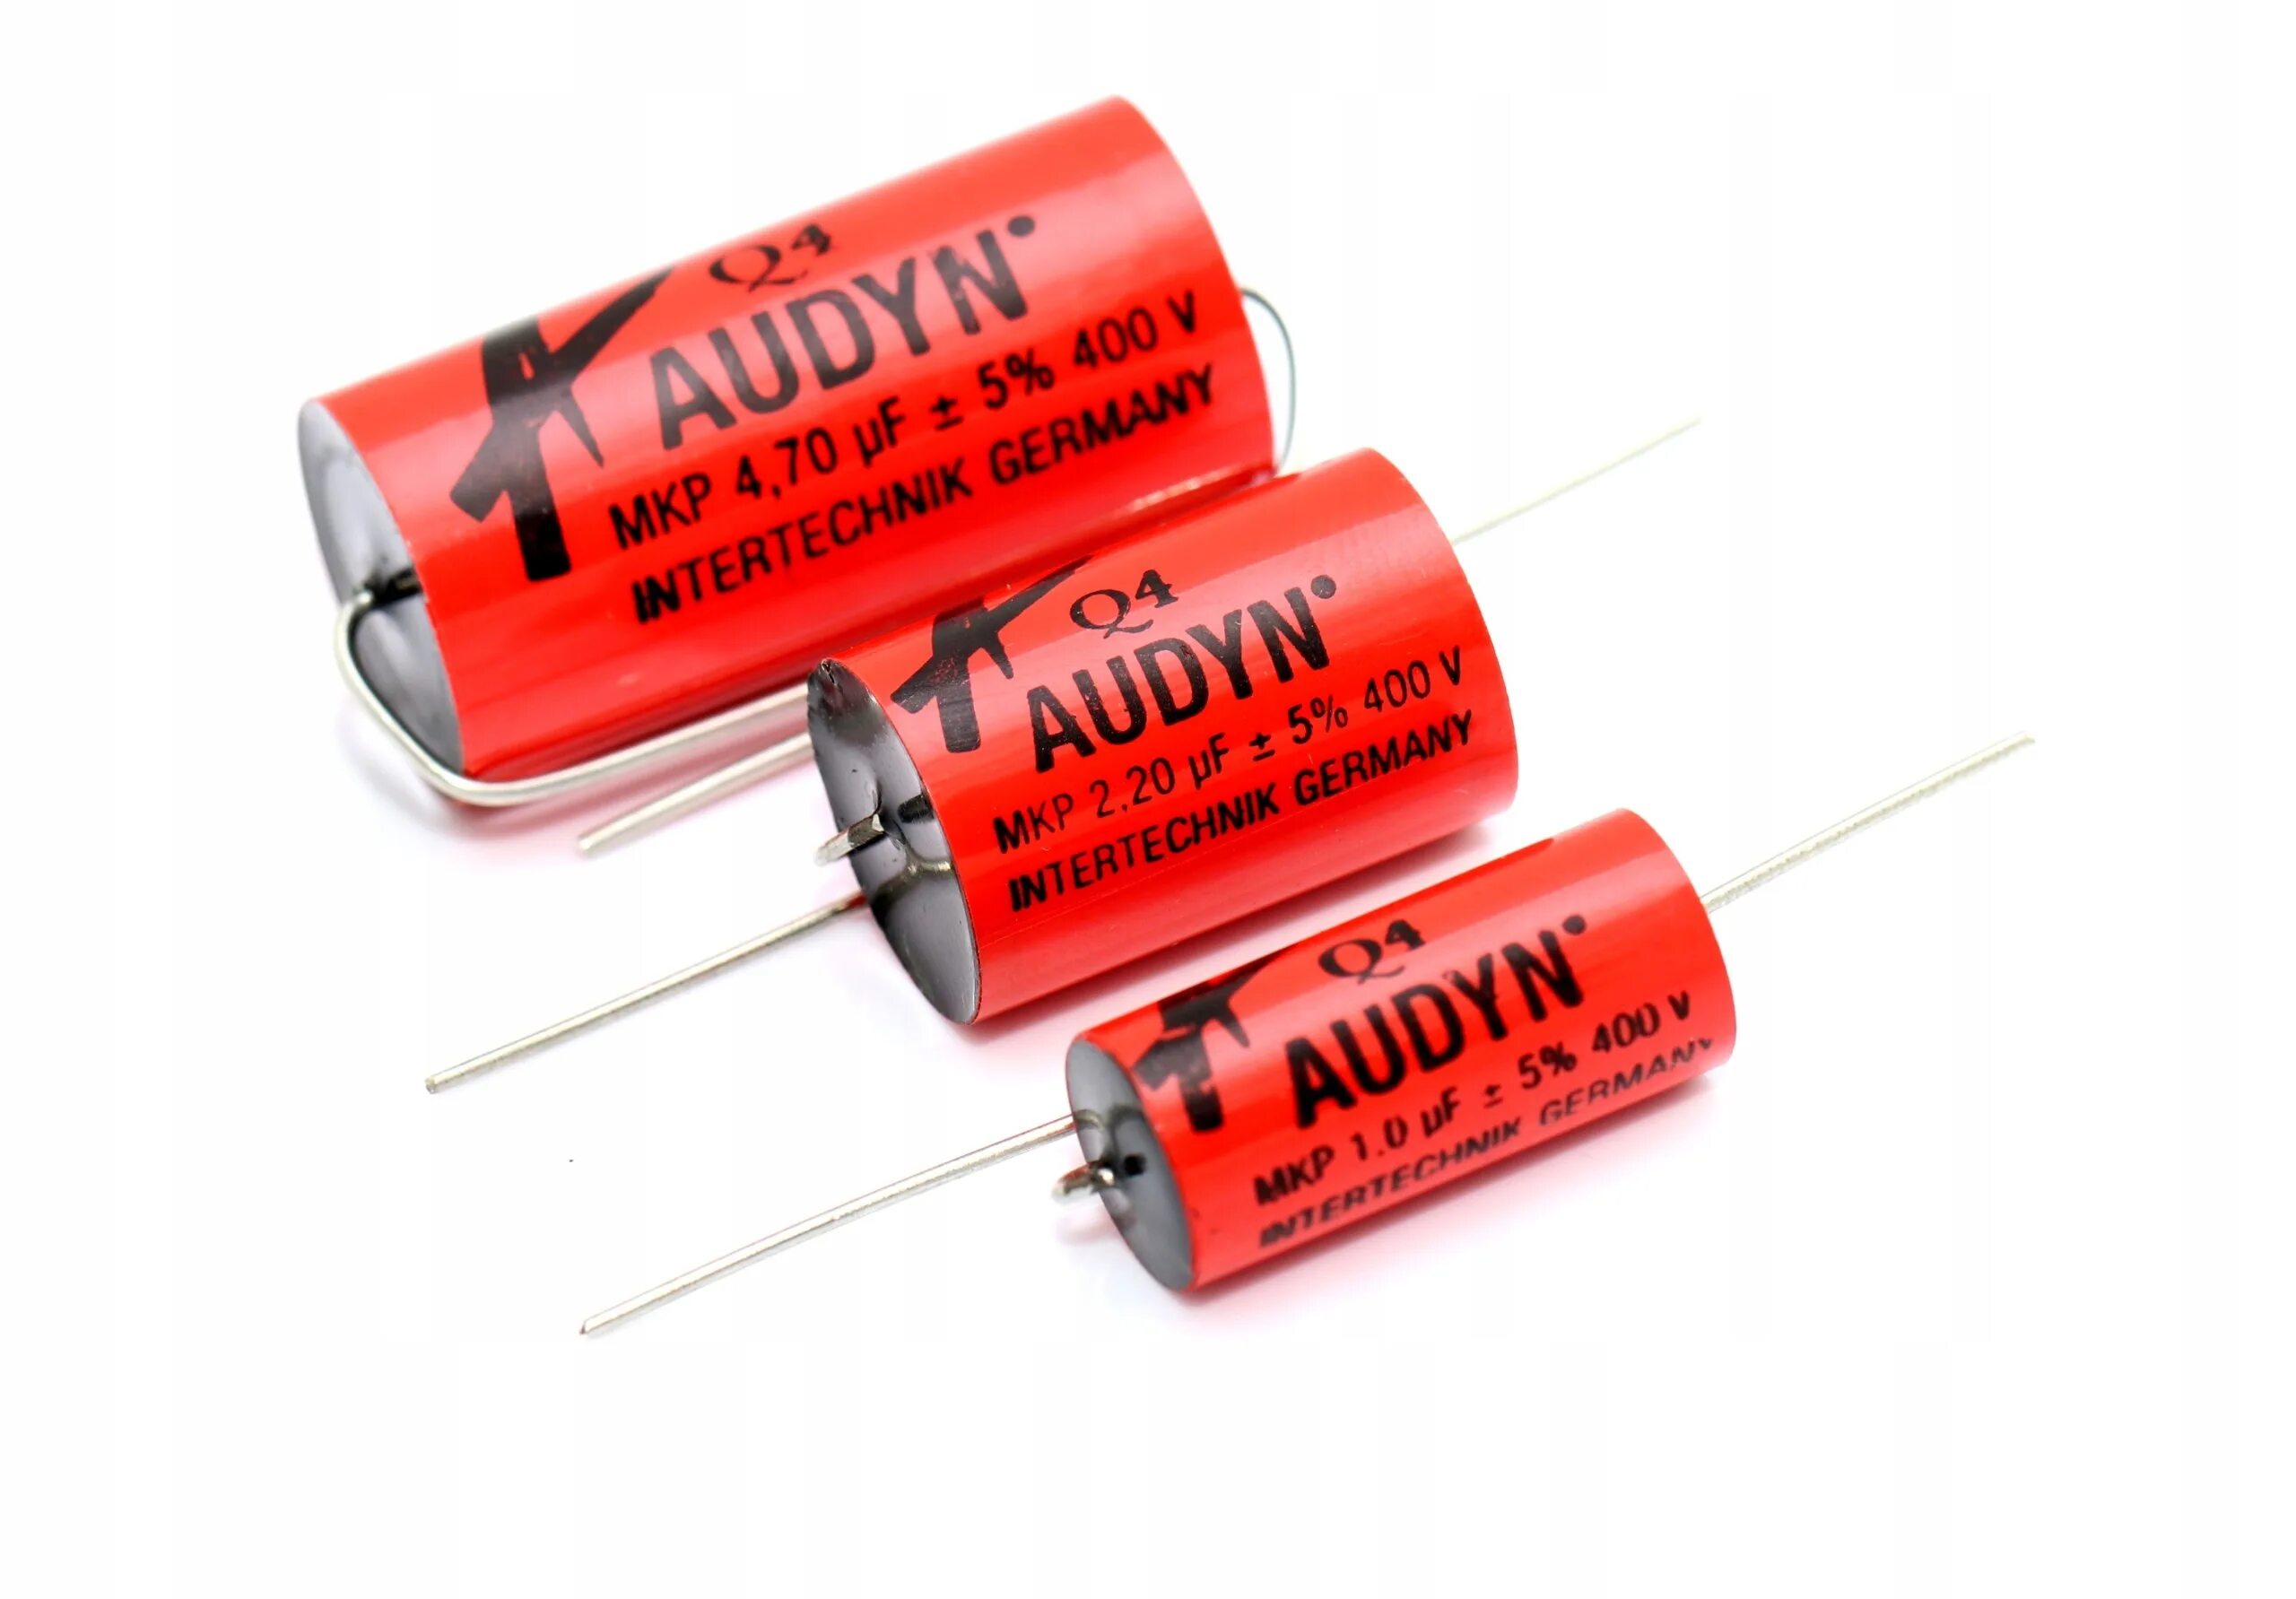 Intertechnik Audyn cap Plus. Audyn конденсаторы. MKP конденсаторы 20 МКФ 800 В. Audyn cap KP SN.